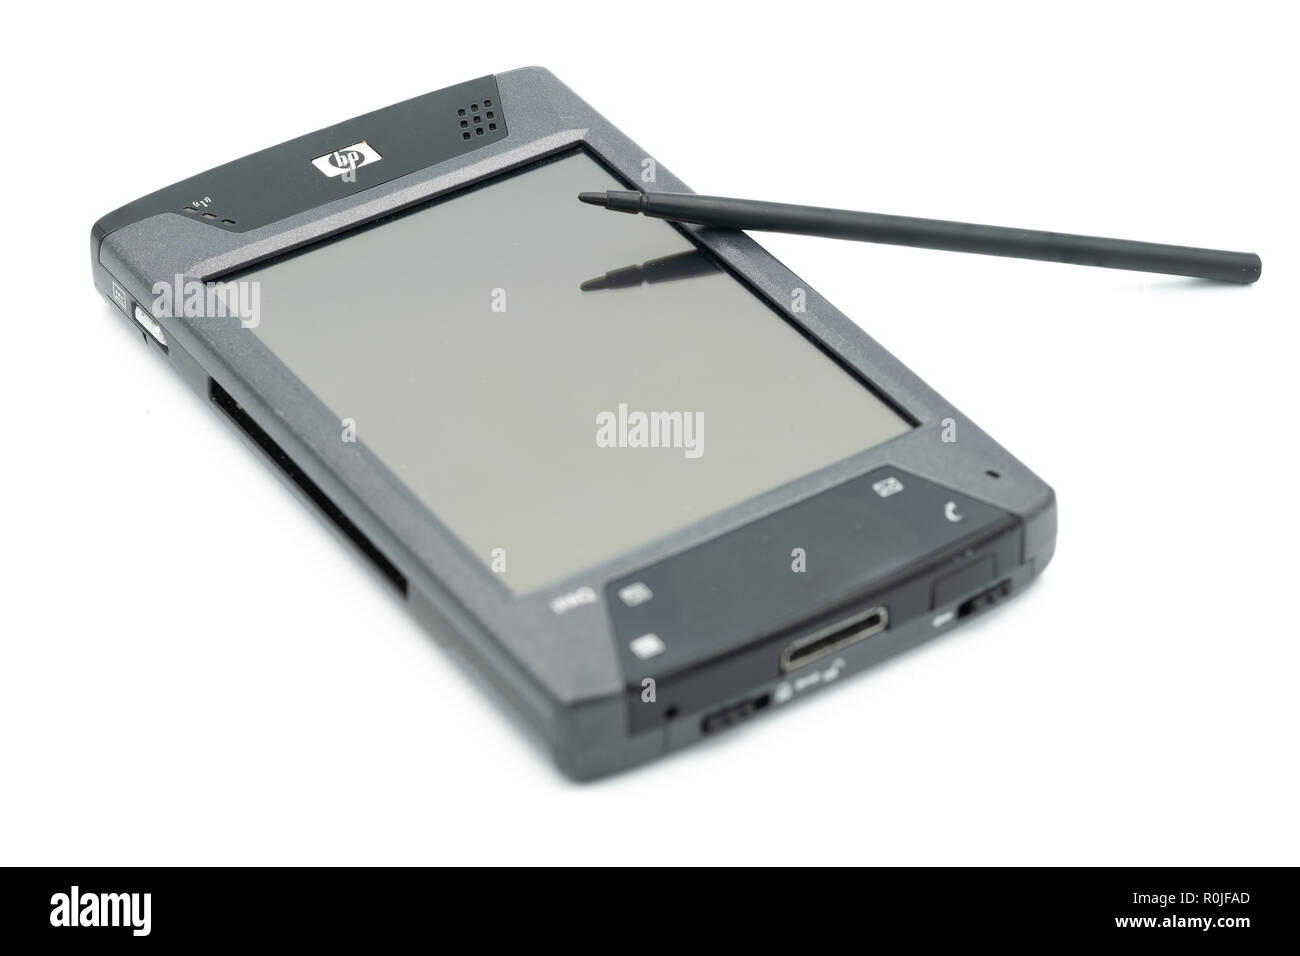 HP iPaq hx4700 PDA with stylus Stock Photo